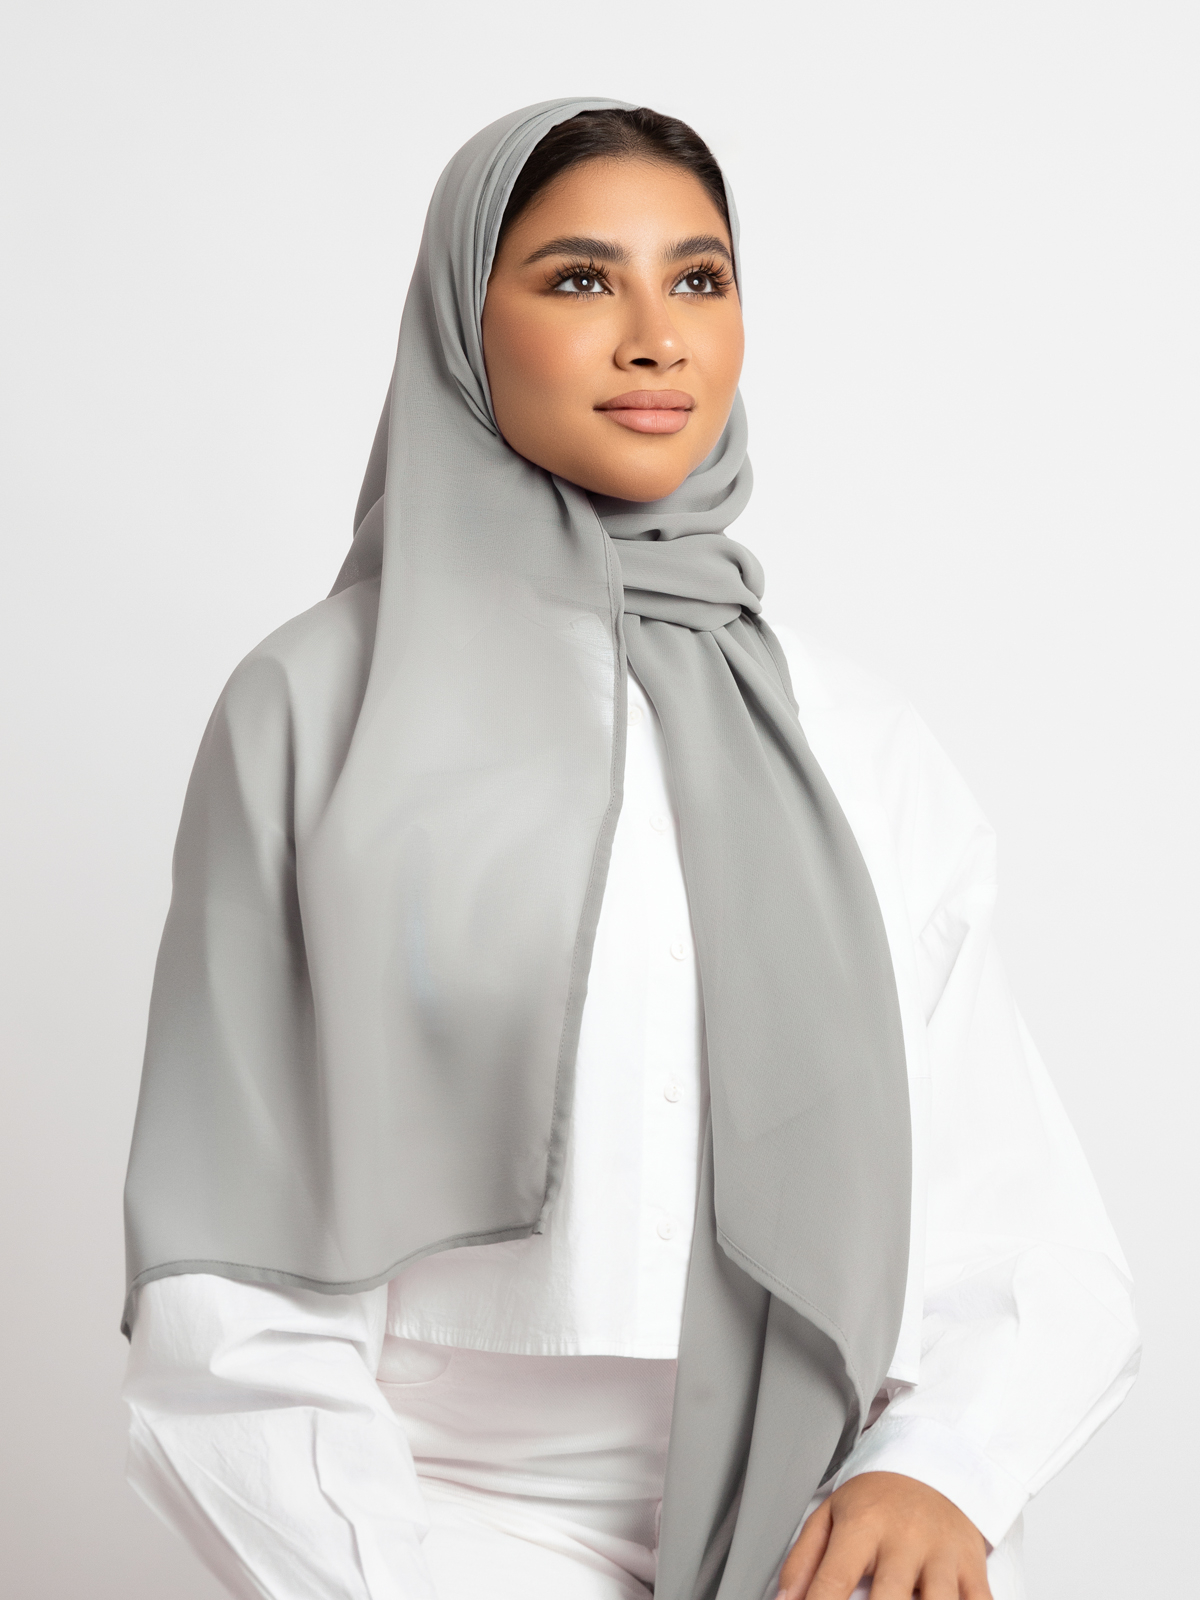 Luxurious chiffon hijab plain tarha 200 cm long bluish gray color high quality material online in ksa by kaafmeem